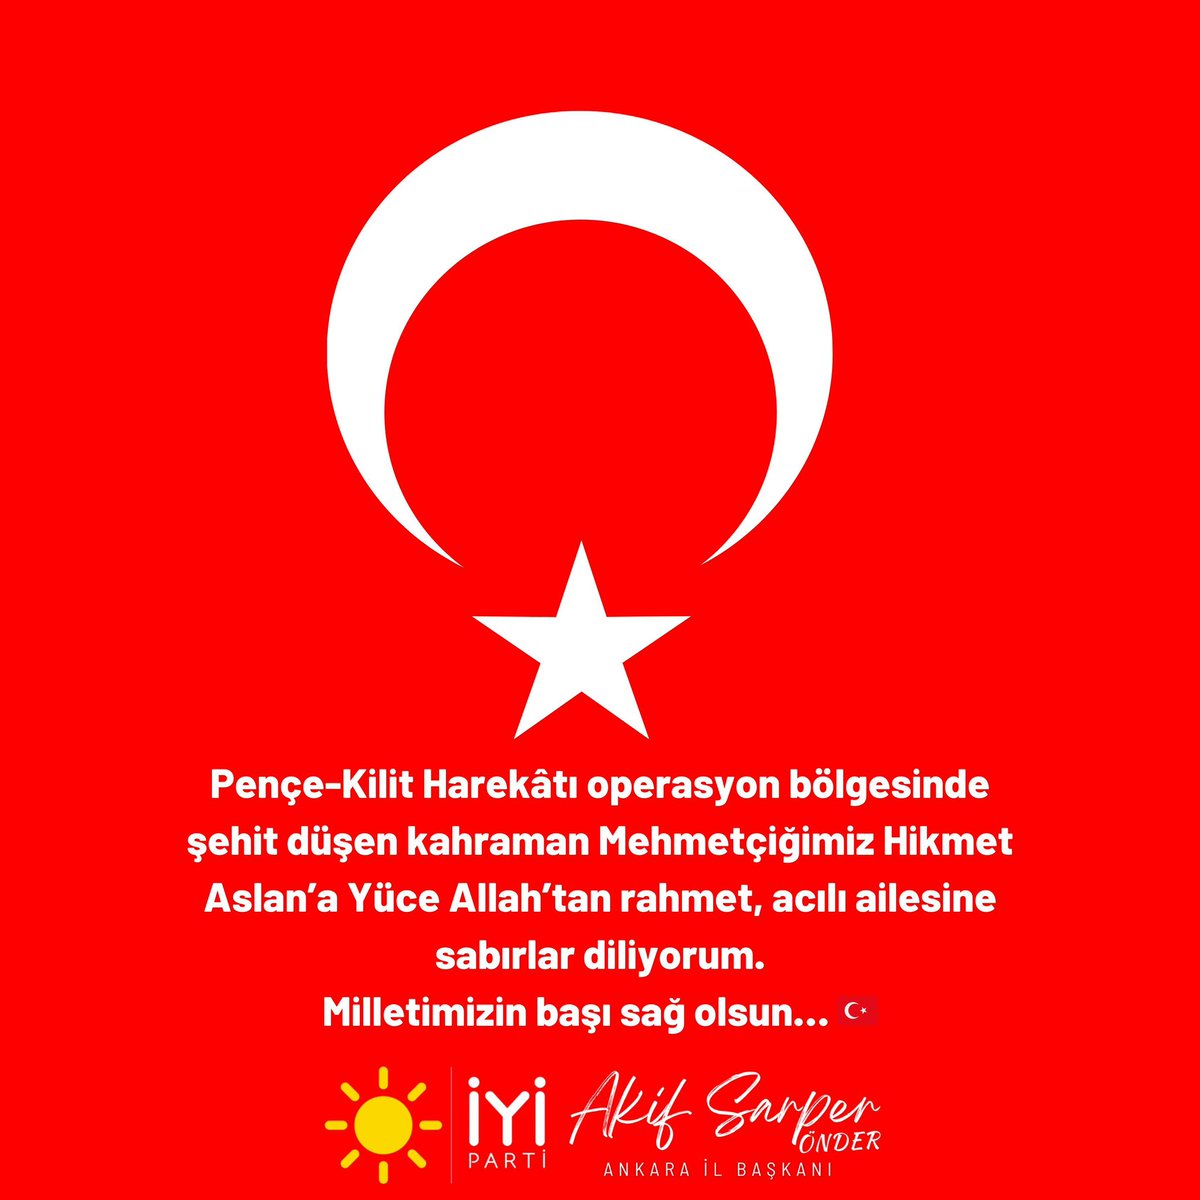 Akif Sarper Önder (@AkifSarperOnder) on Twitter photo 2024-04-09 20:02:34